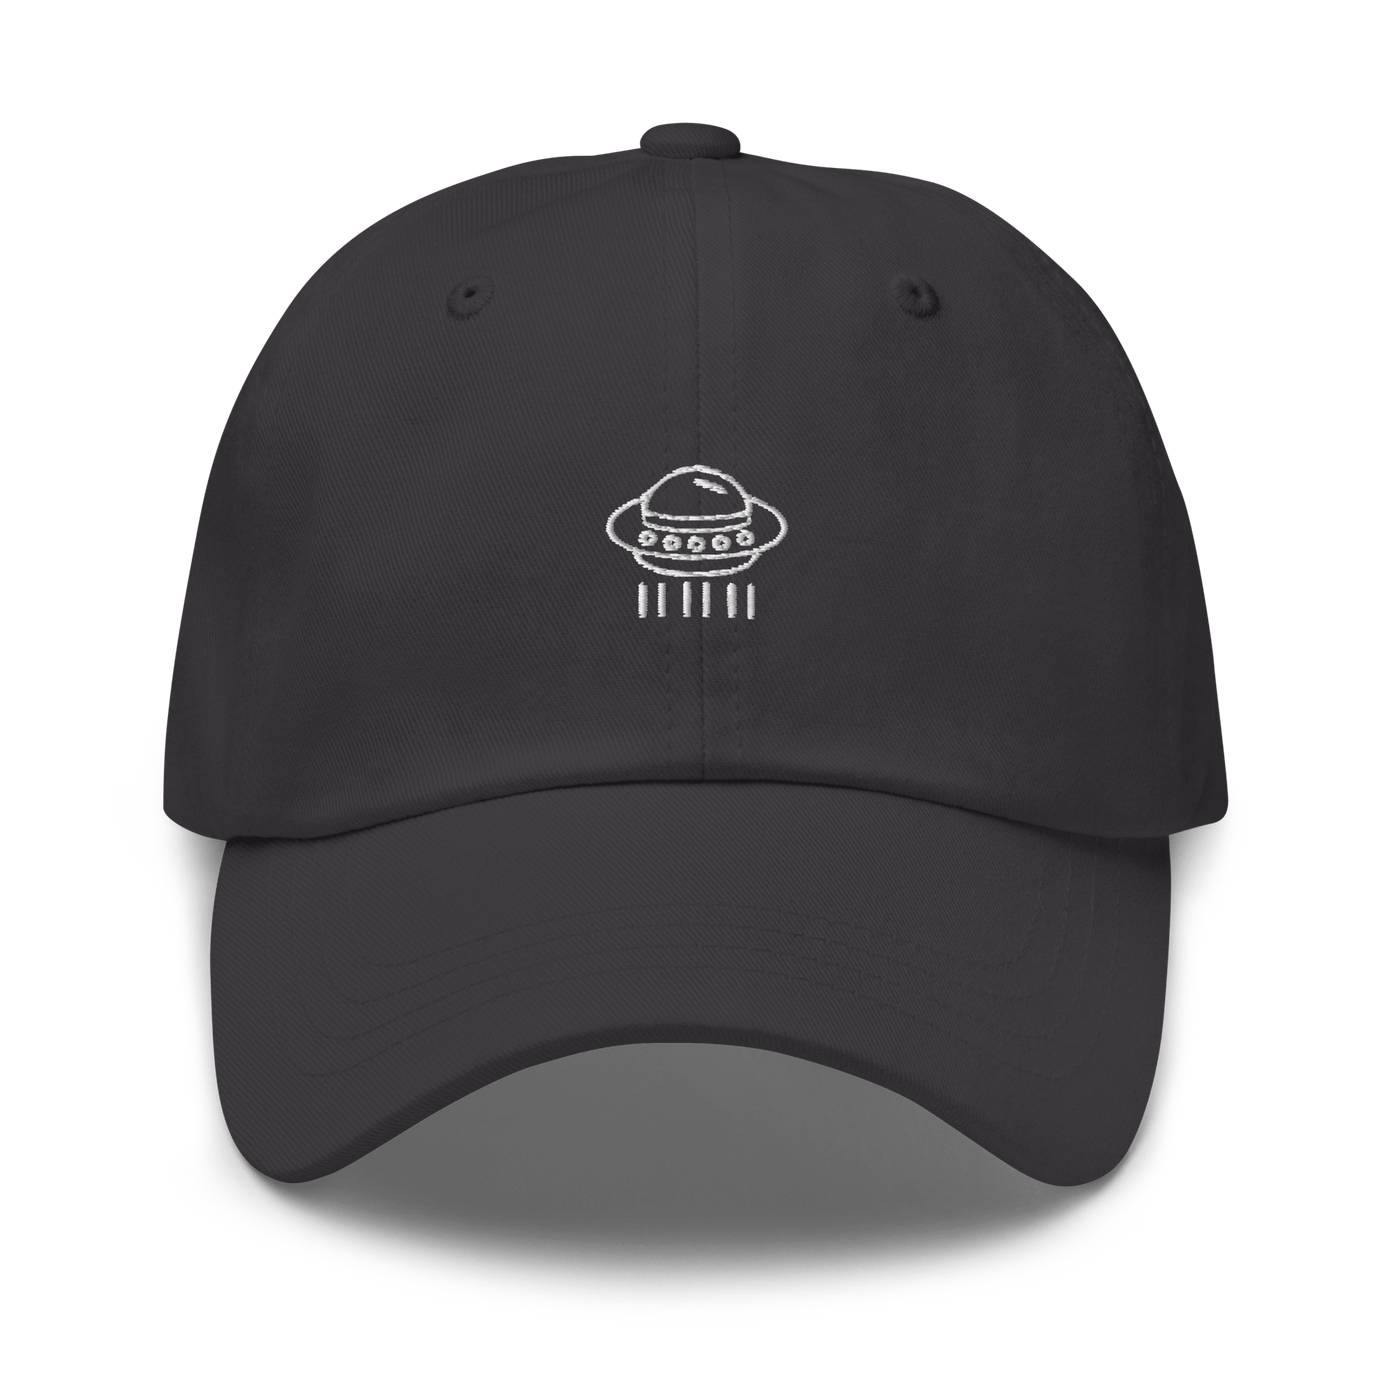 UFO Dad hat - Dark Grey - - Just Another Cap Store